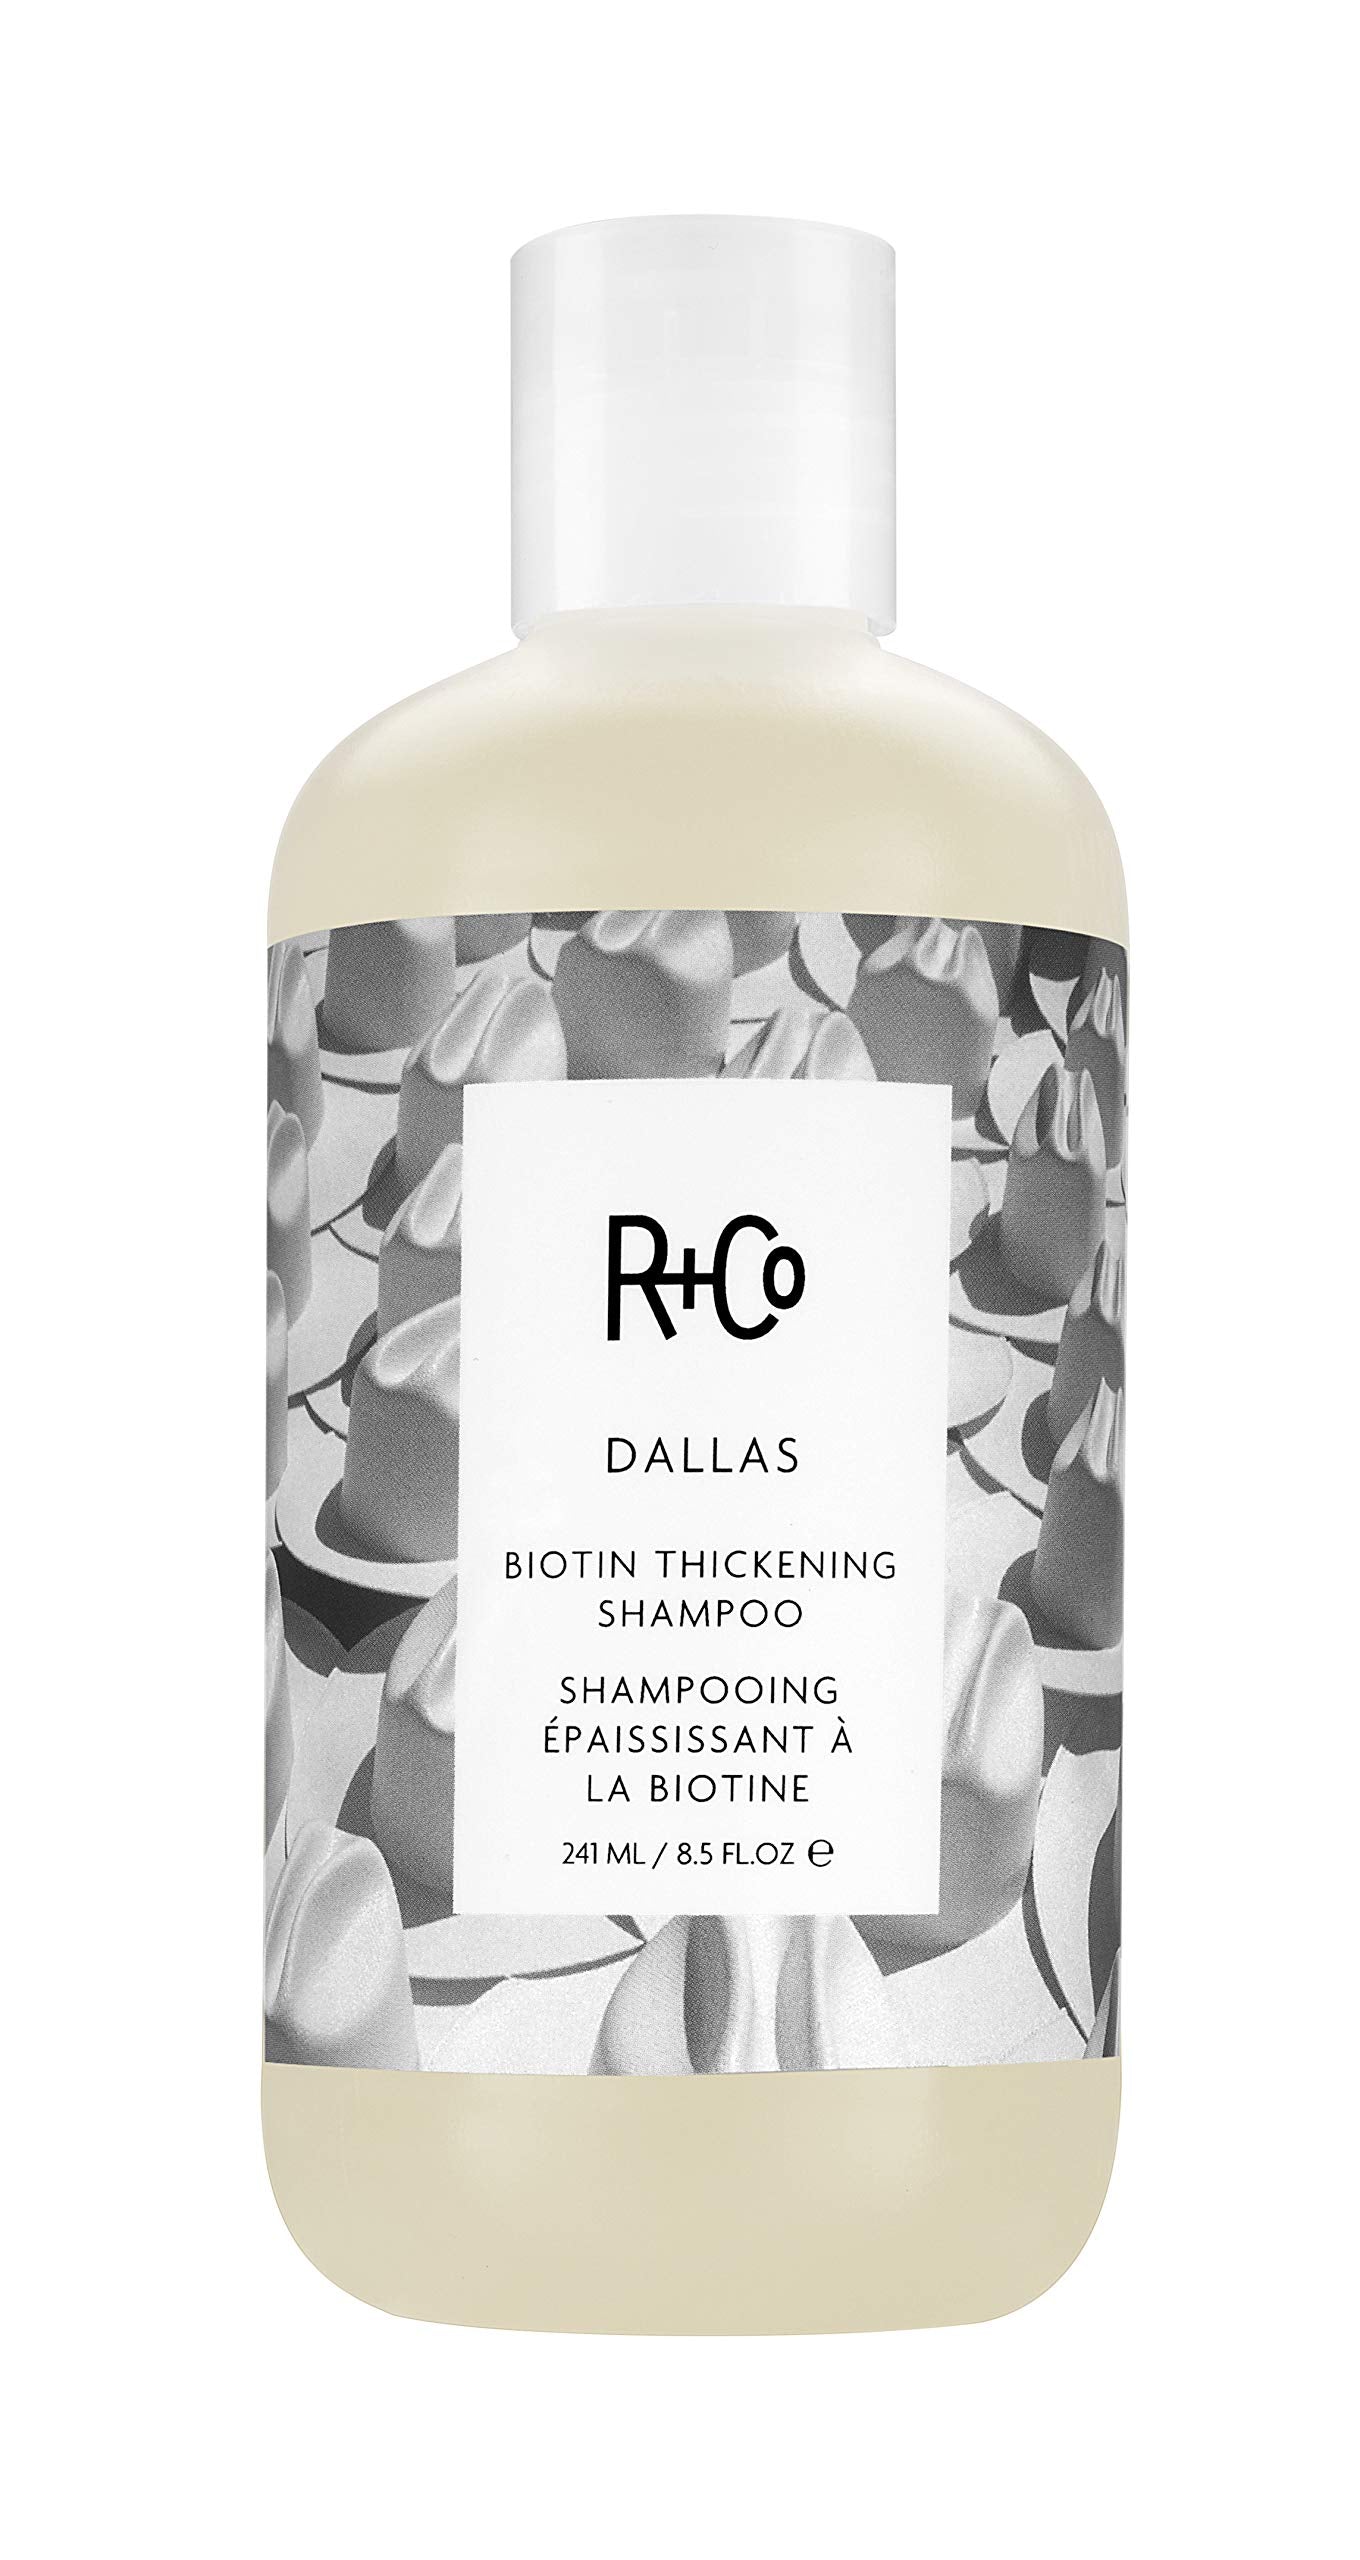 R+Co Dallas Thickening Shampoo